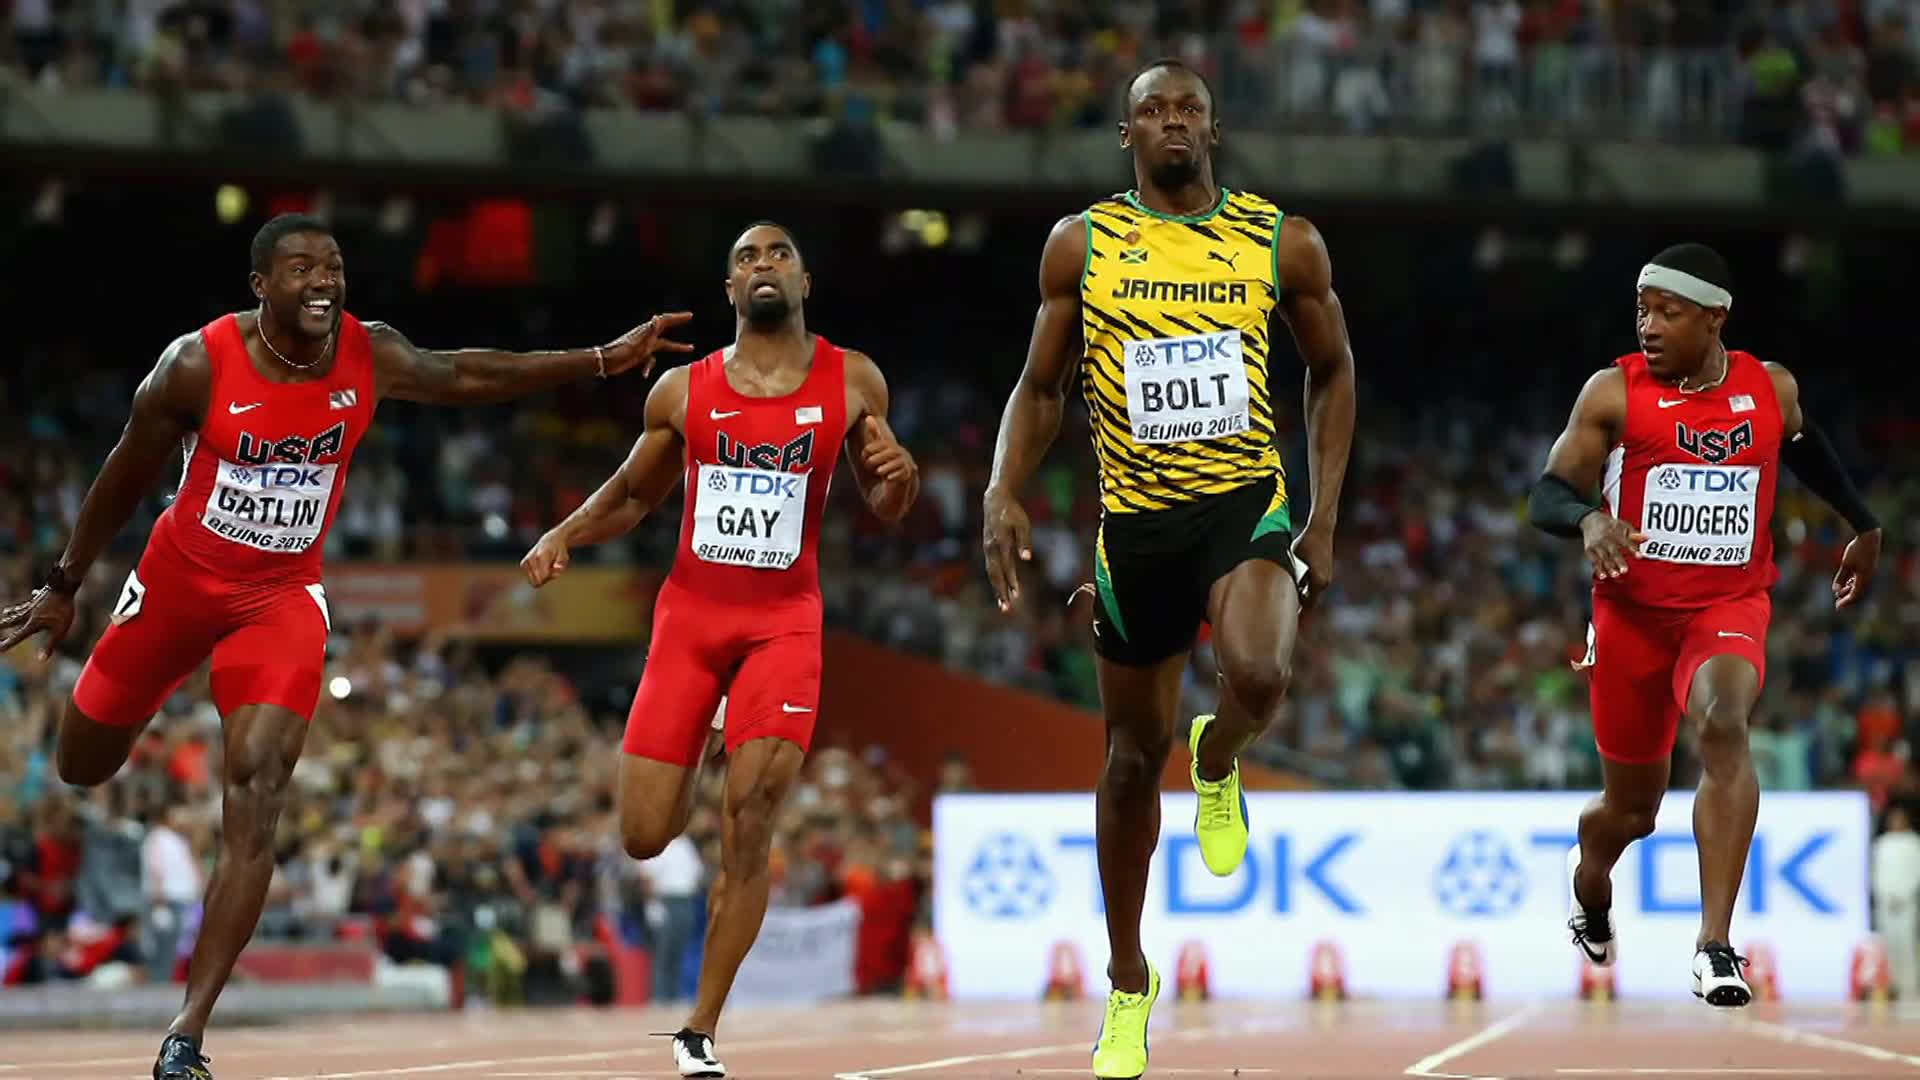 Usain Bolt claims 100m gold at World Championships. Athletics